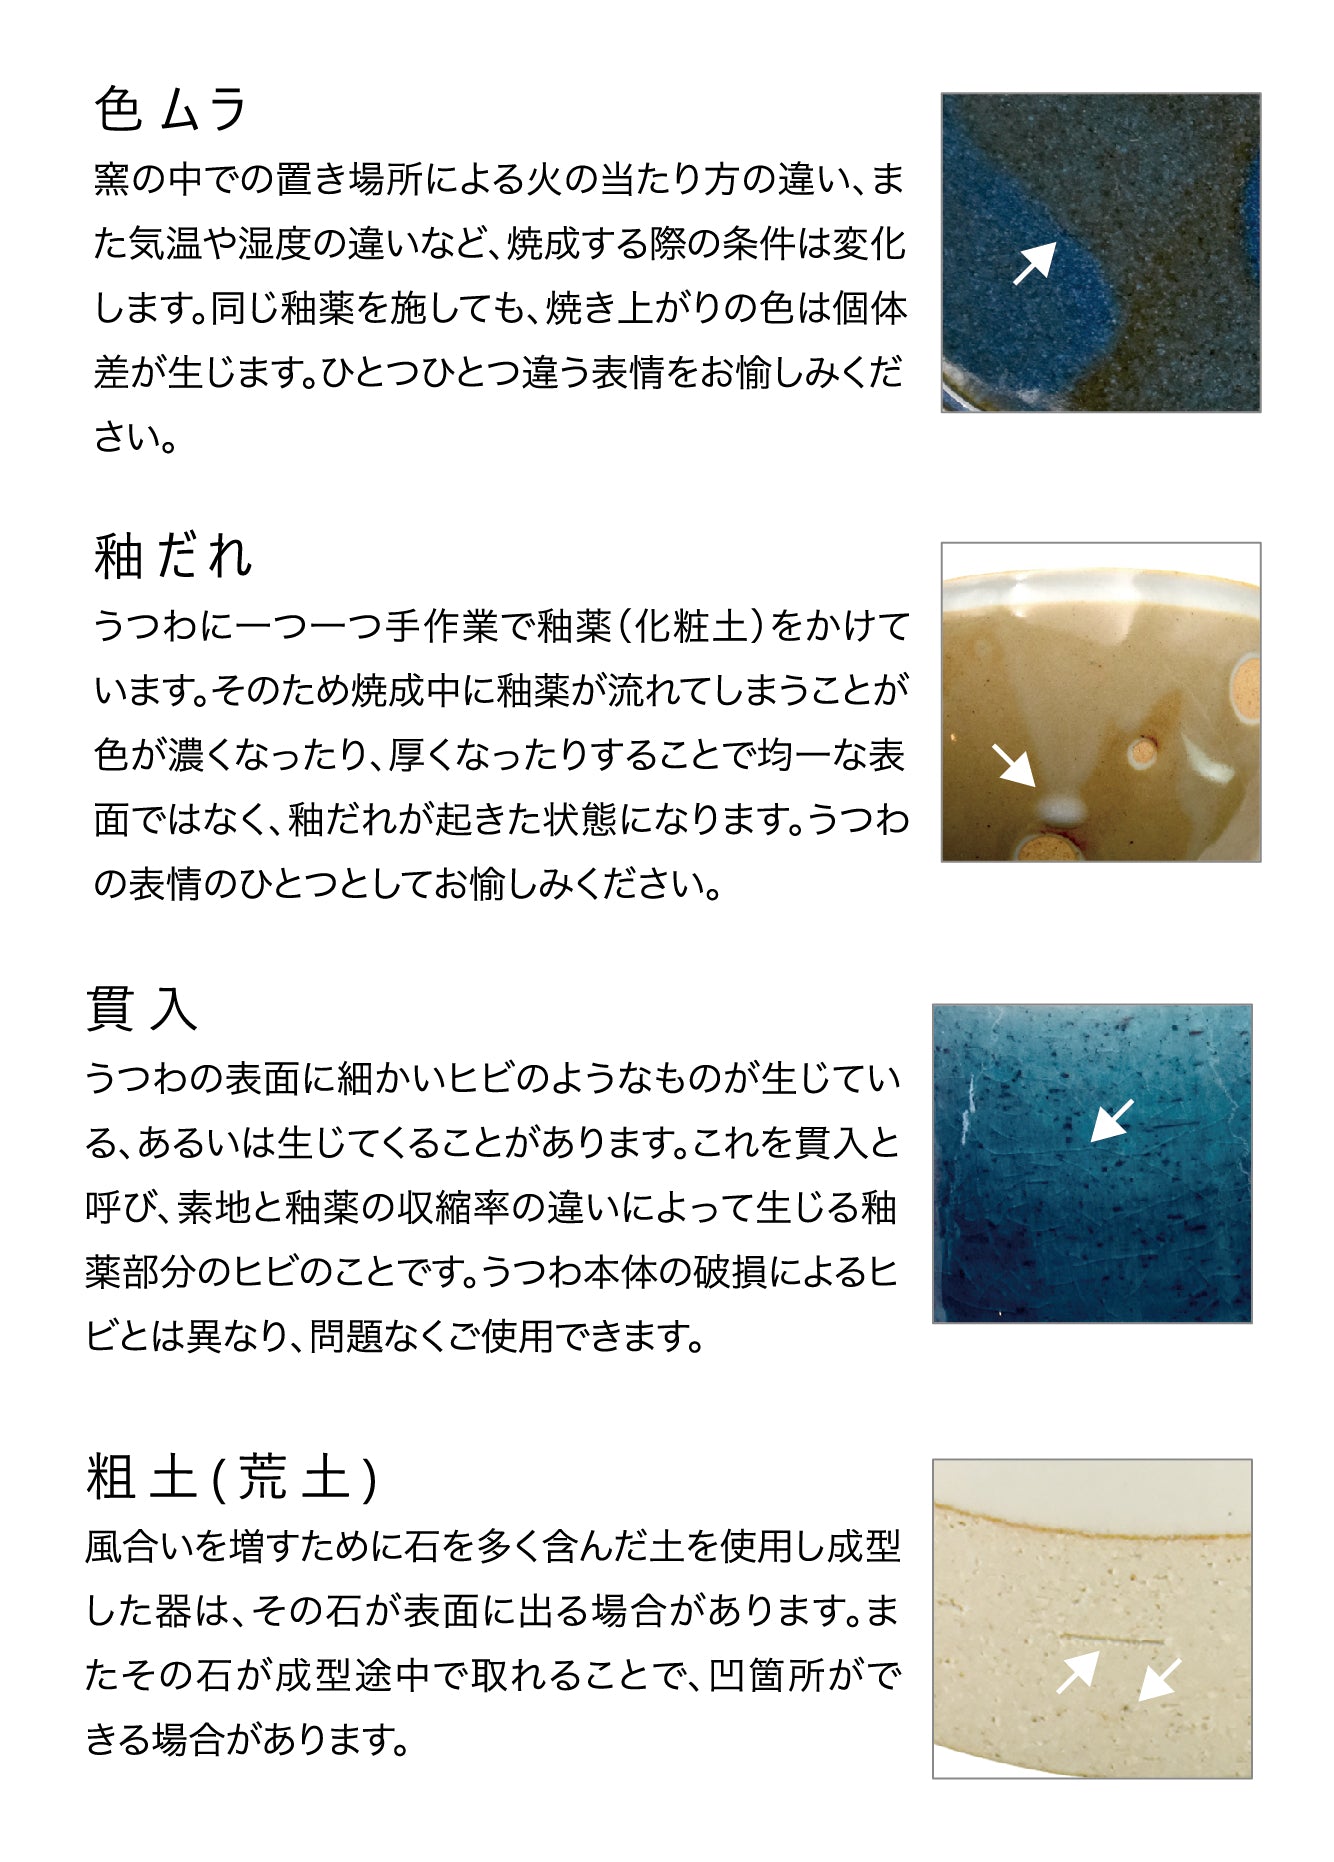 Book cafe マグカップ 窯変グレー(08295)